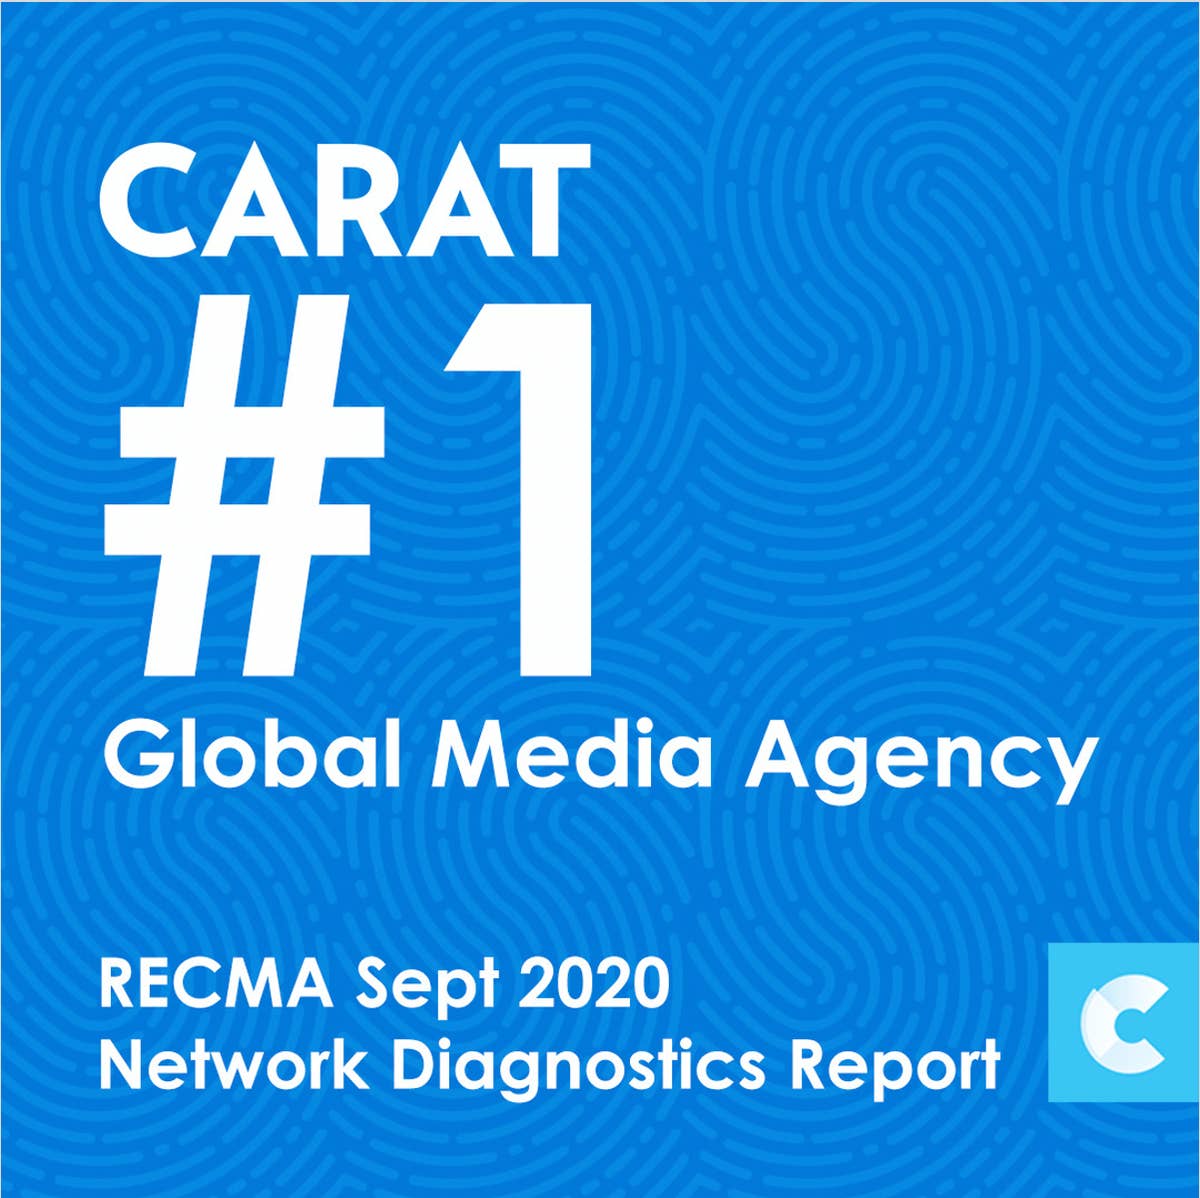 Carat behoudt #1 positie in RECMA Qualitative Diagnostics Report